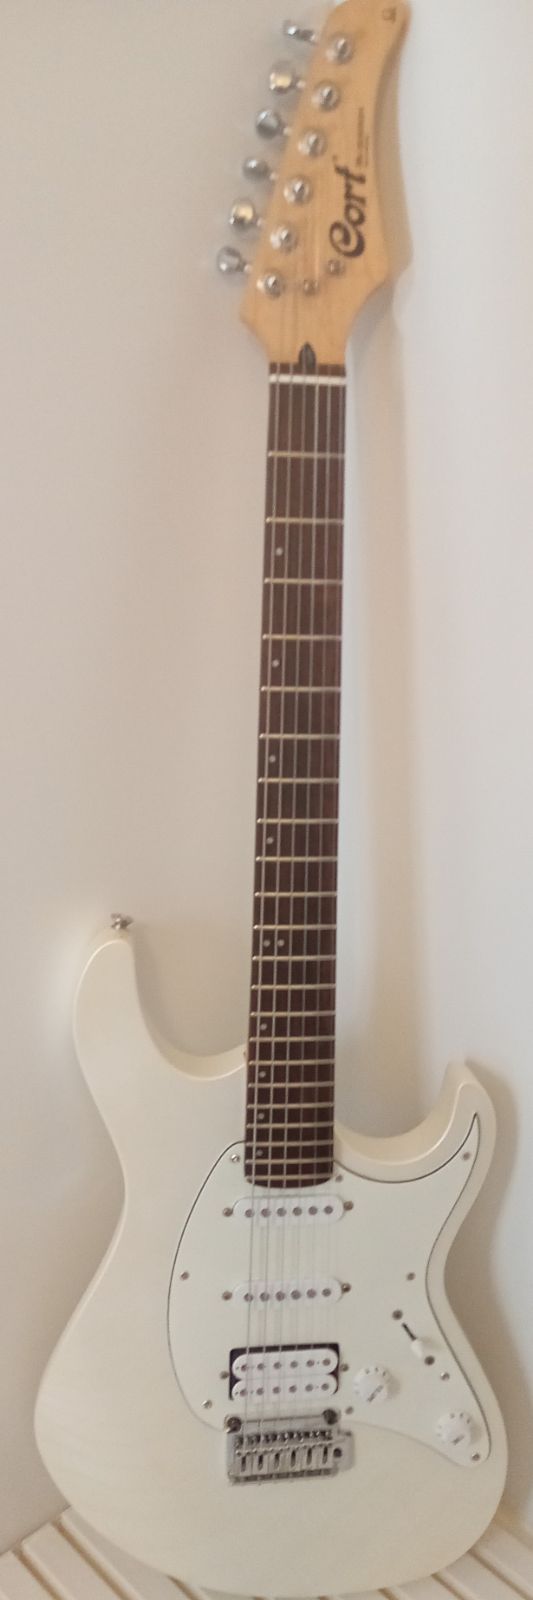 Cort GX210 エレキギター 中古 ジャンク - メディアオフ - メルカリ